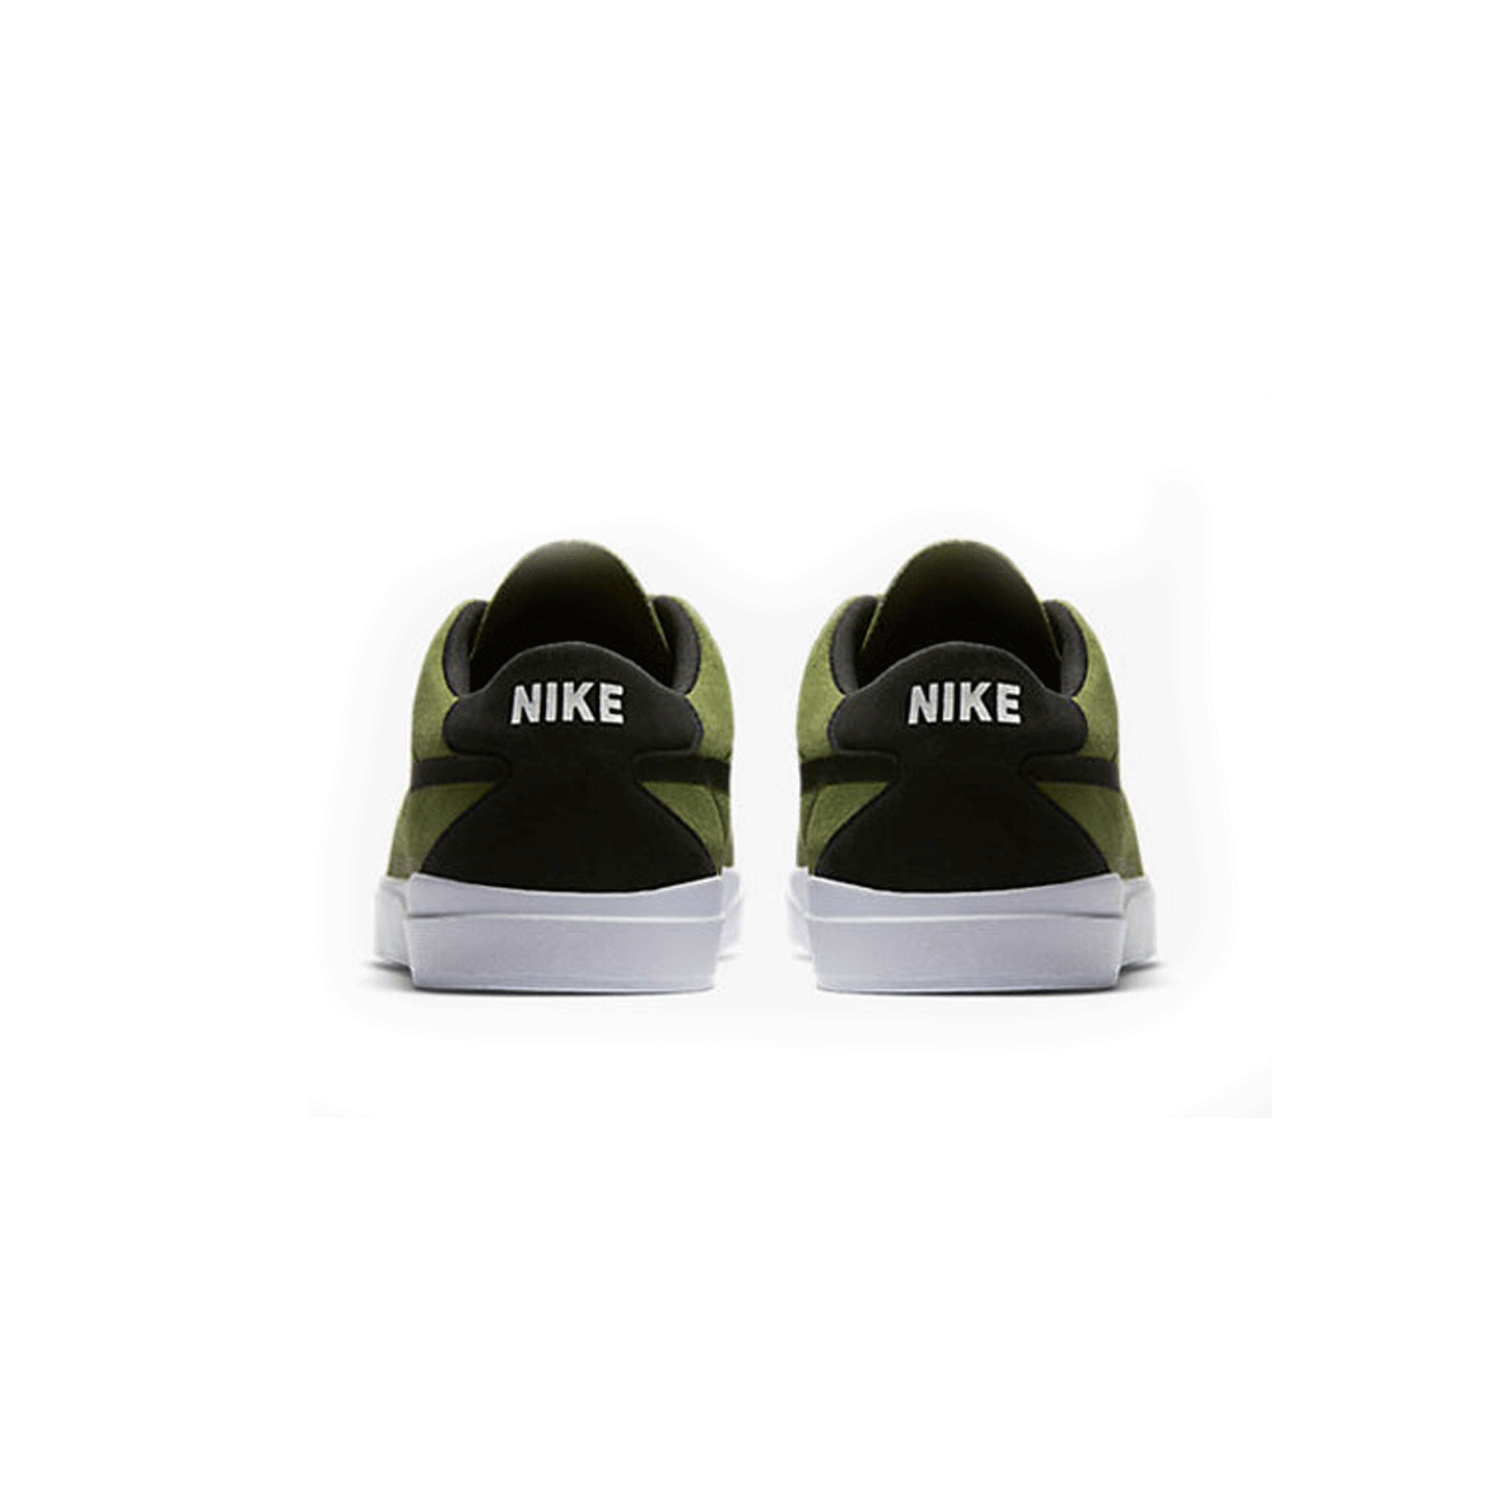 Nike SB - Bruin Hyperfeel - Palm Green/Black-White SALE